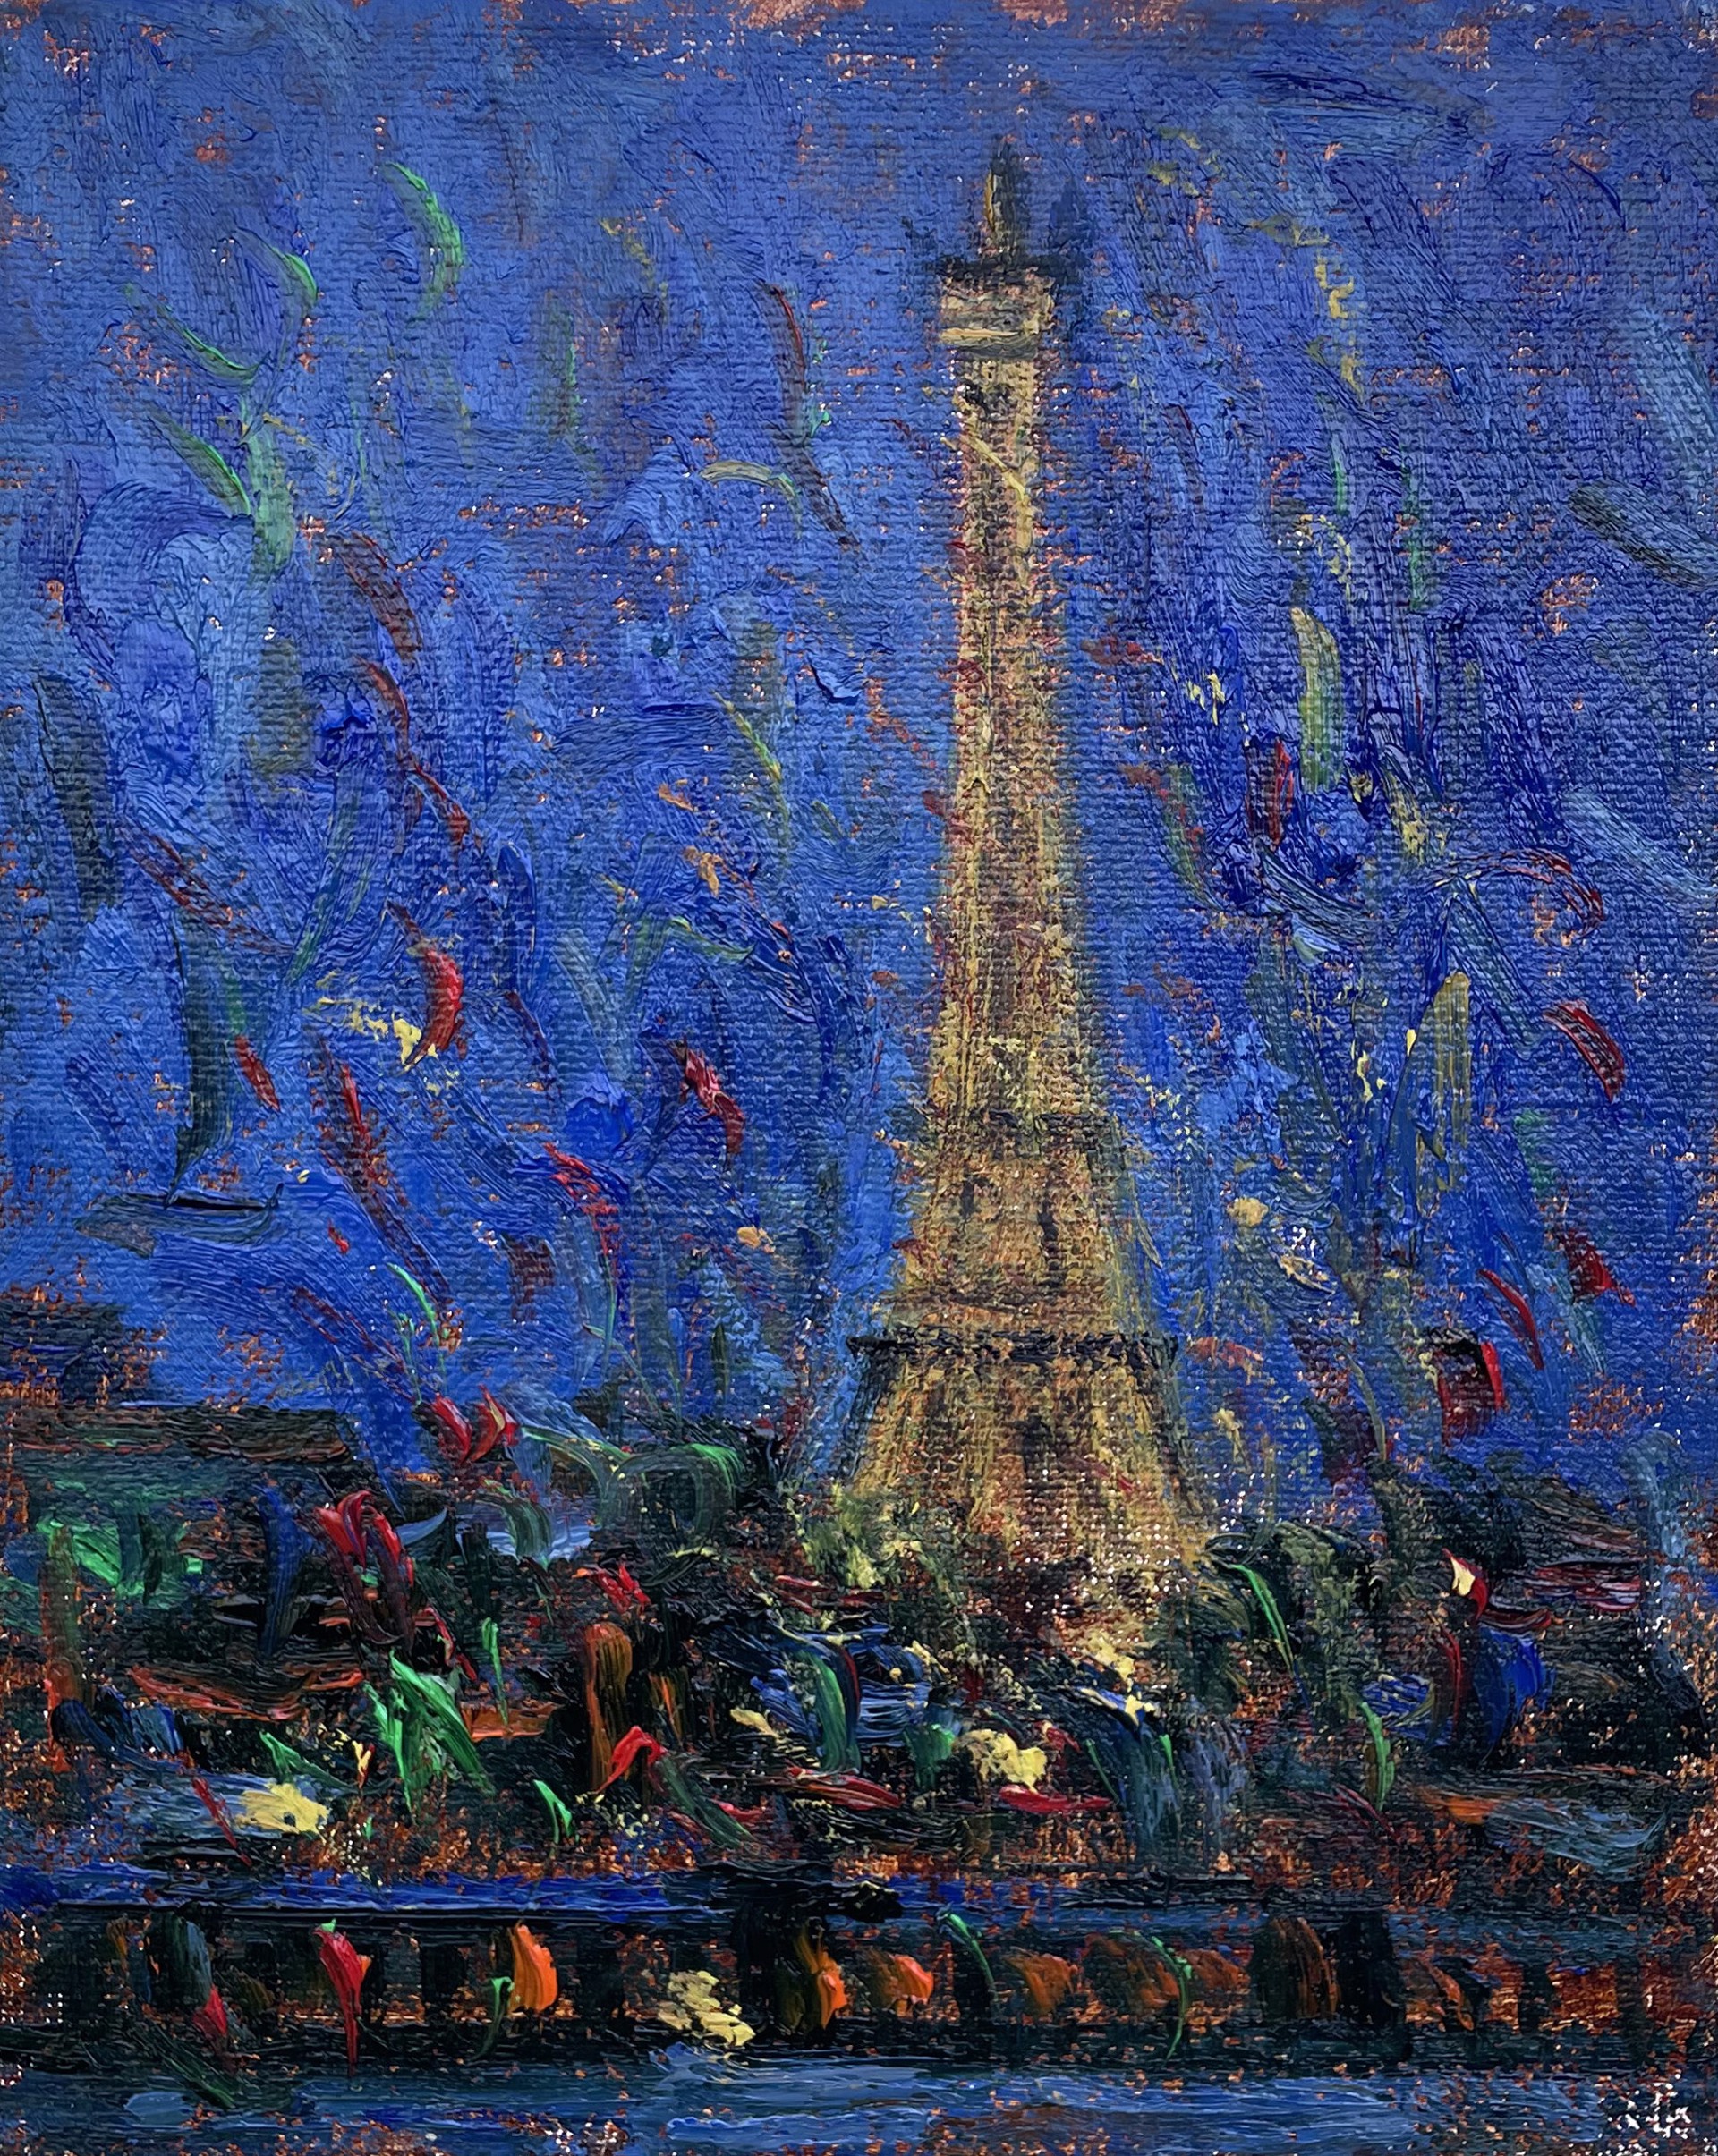 Paris la nuit, Tour Eiffel, study by Samir Sammoun